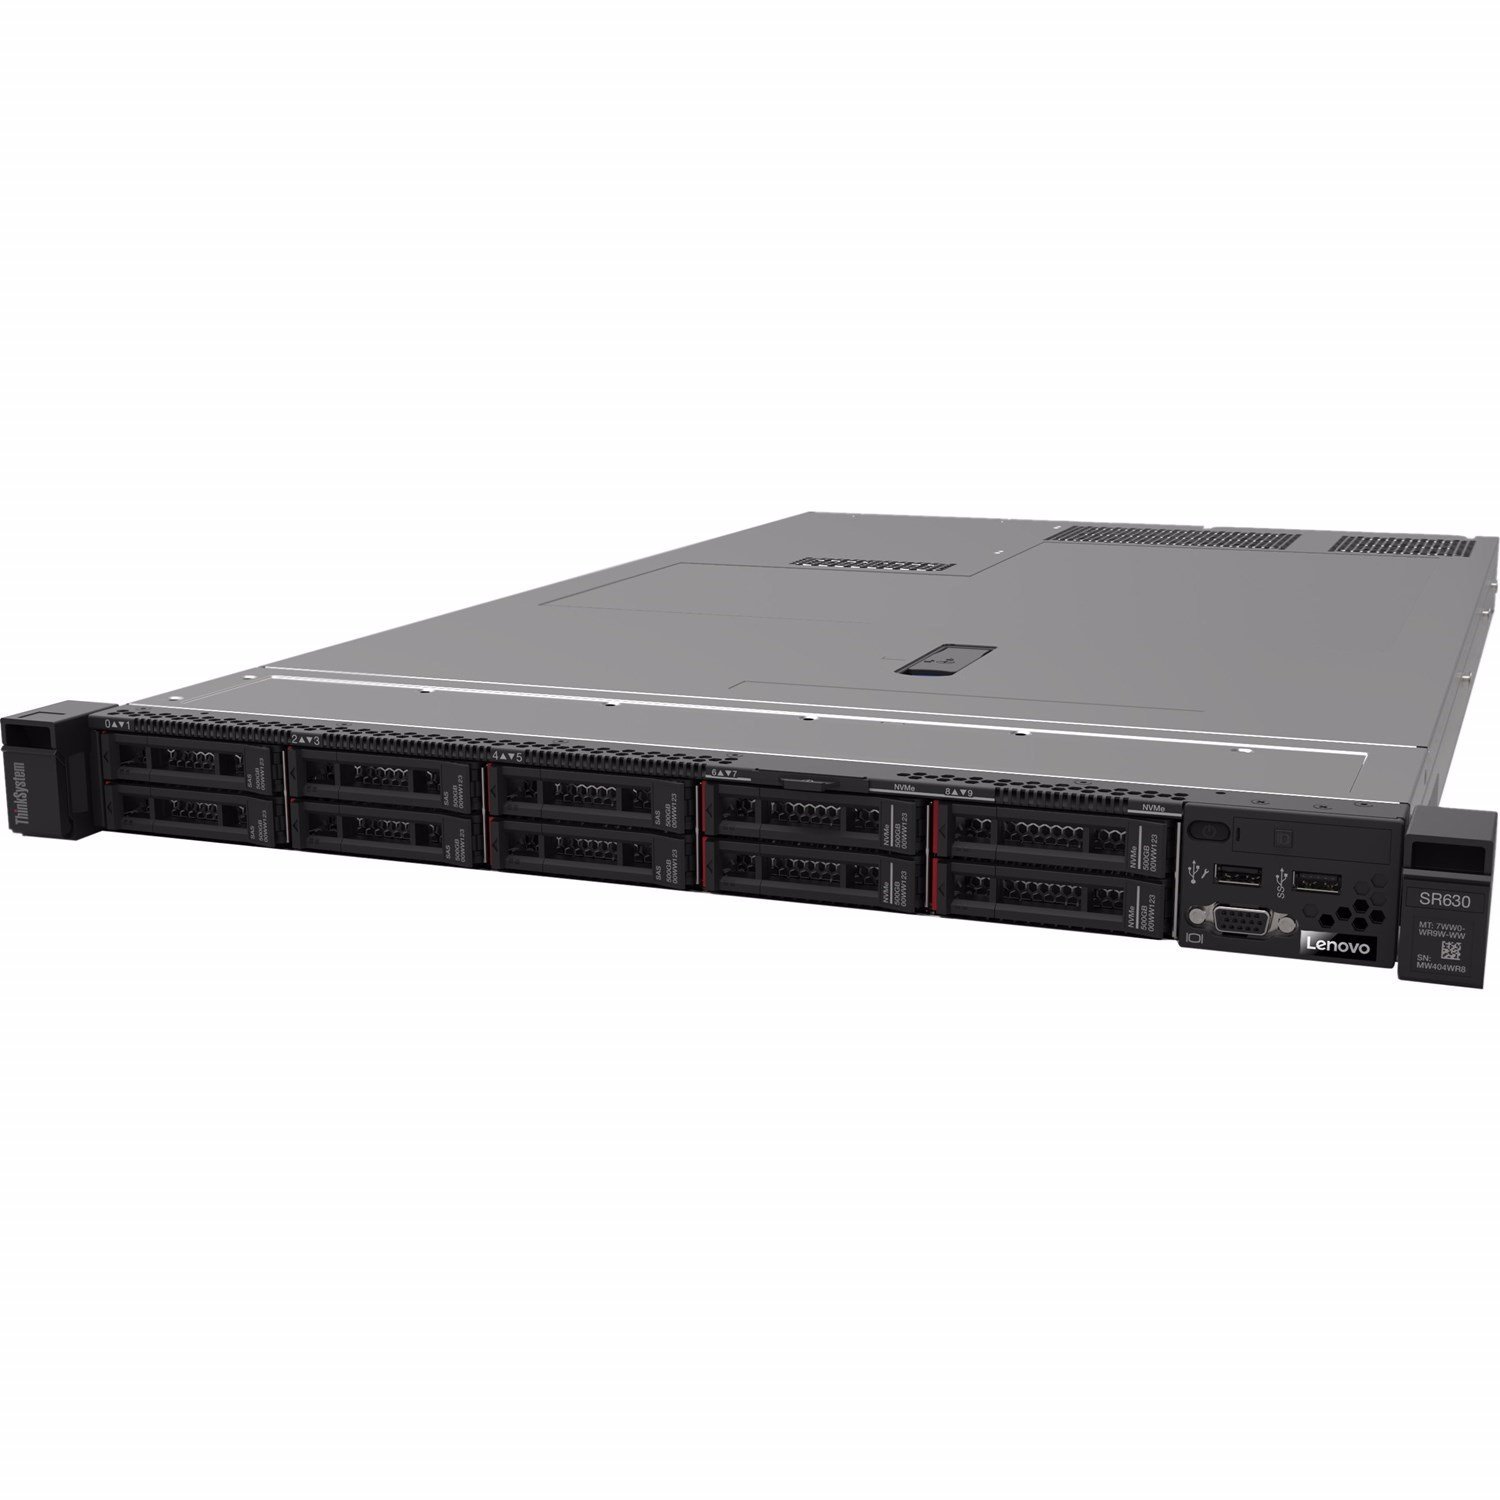 Lenovo ThinkSystem SR630 1U Rack Server, 1xIntel Xeon Bronze 3206R, 1x16GB 2Rx8, 6 X 2.5' HS HDD Bays, HW Raid 530-8i,1x750W Psu, XCC Ent, 3Yr LTD WTY